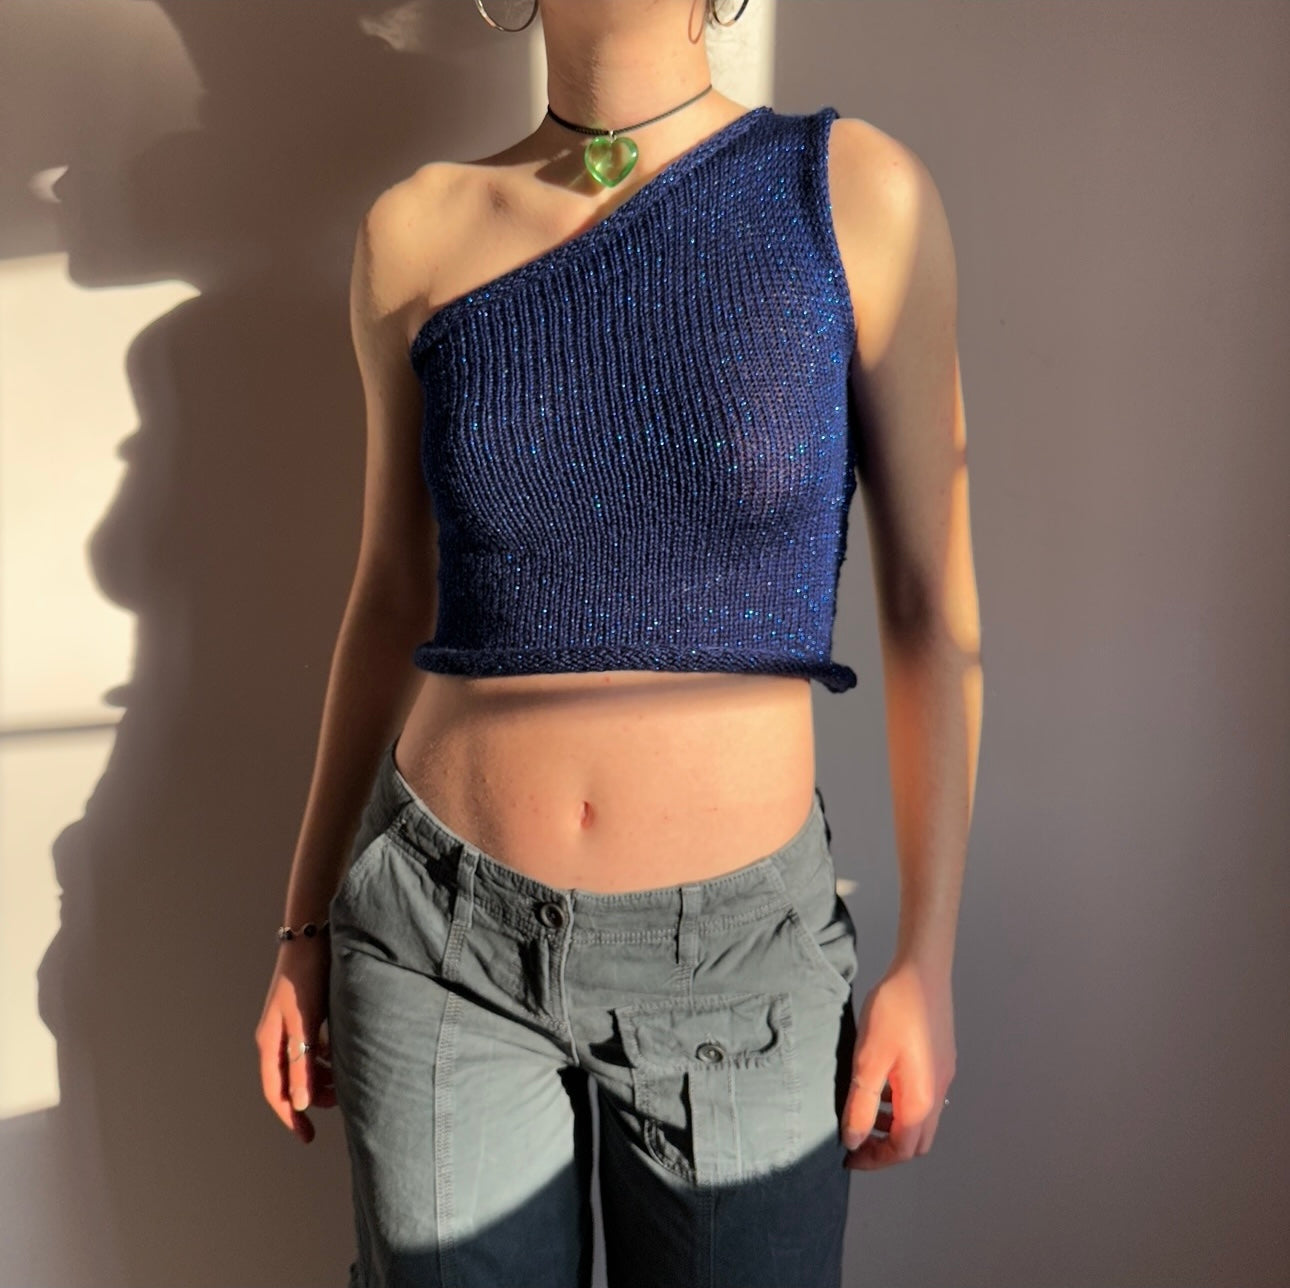 Handmade knitted sparkly dark blue asymmetrical one shoulder top